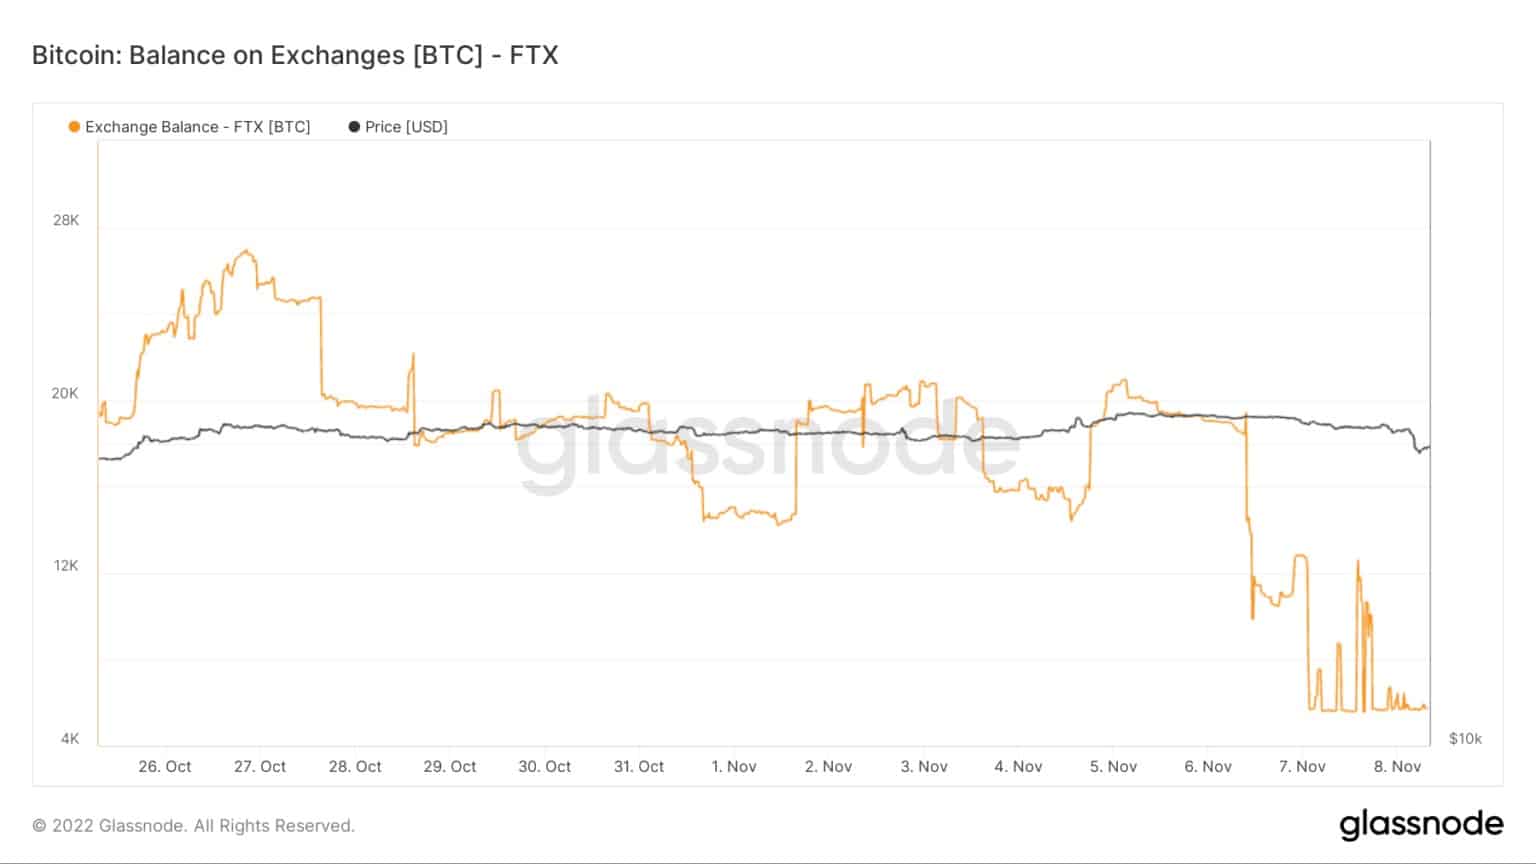 FTX Bitcoin balance from October to November 2022